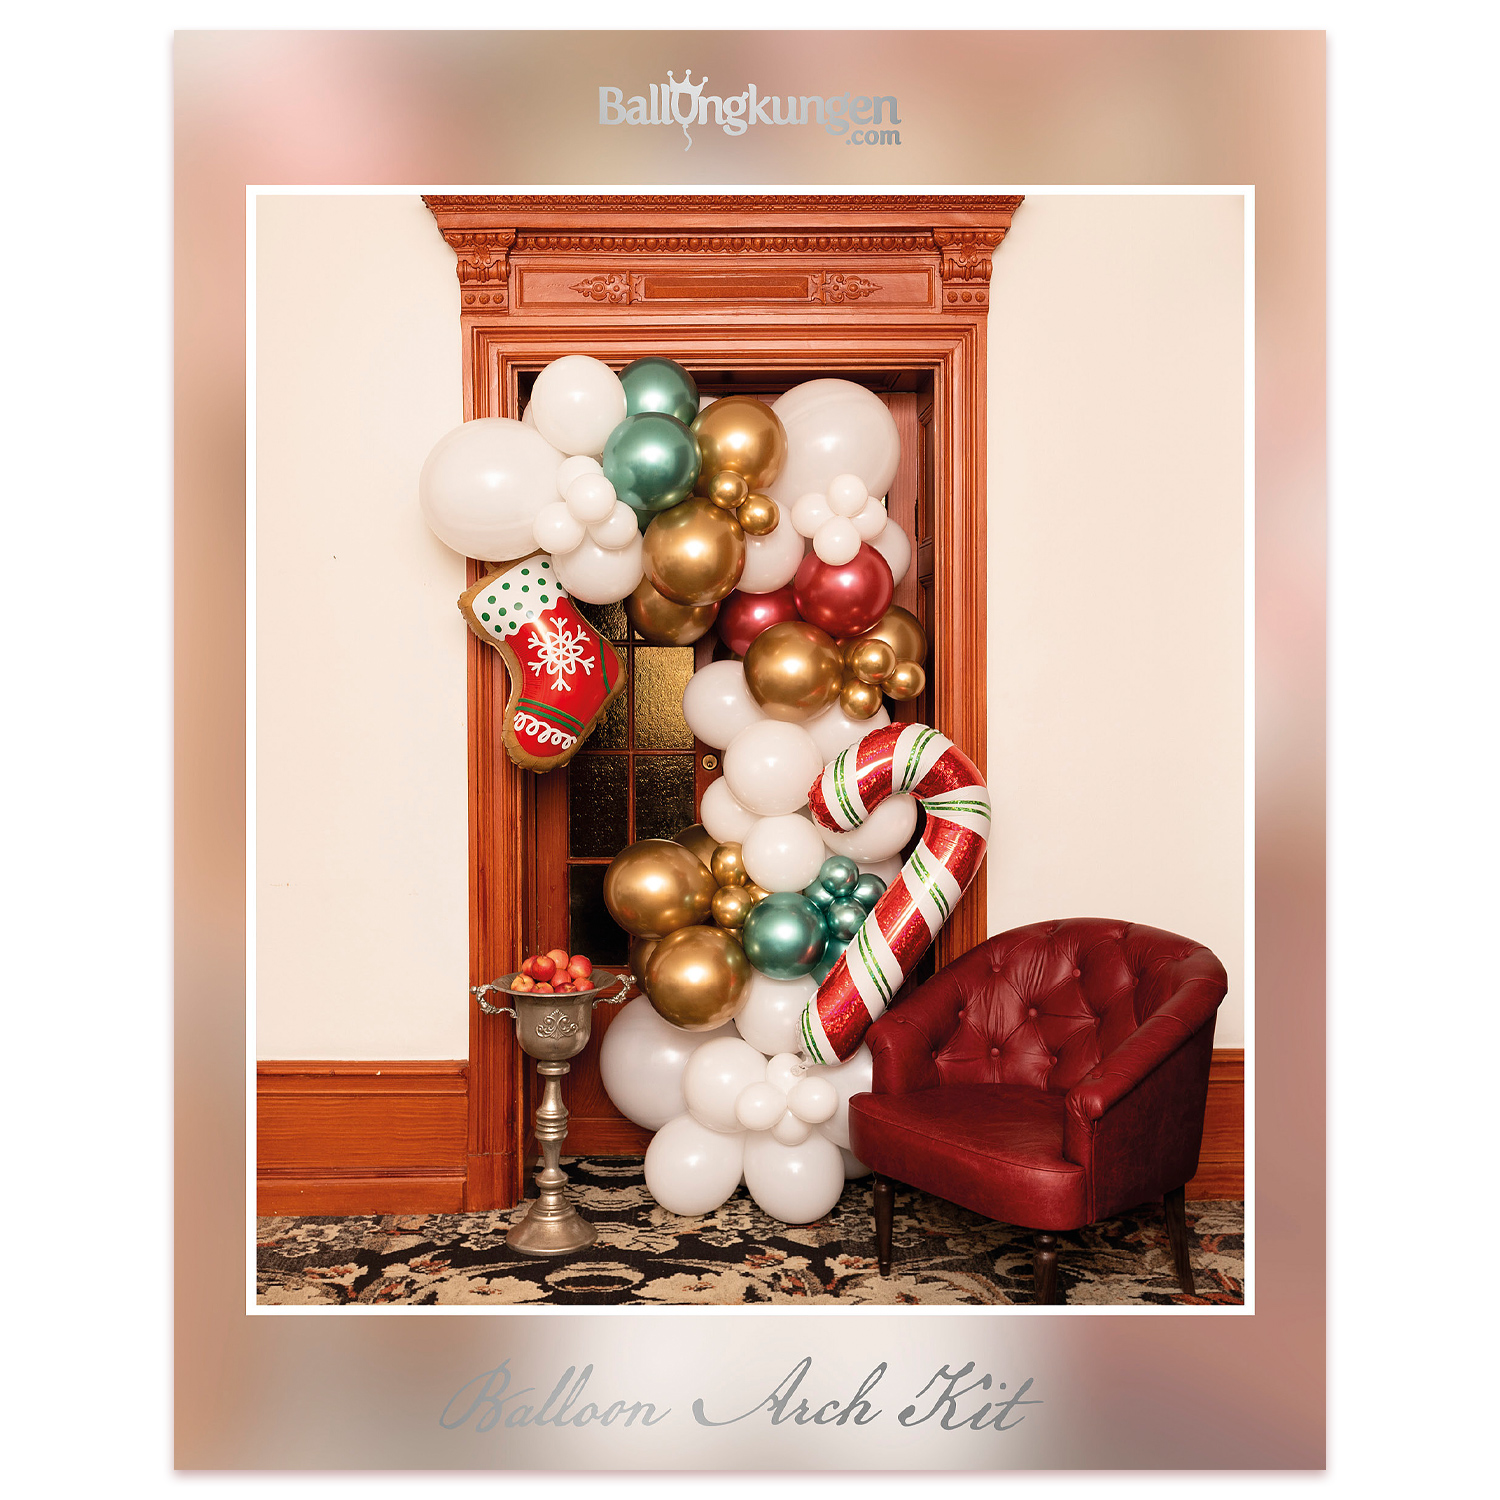 Balloon Arch Kit - Christmas